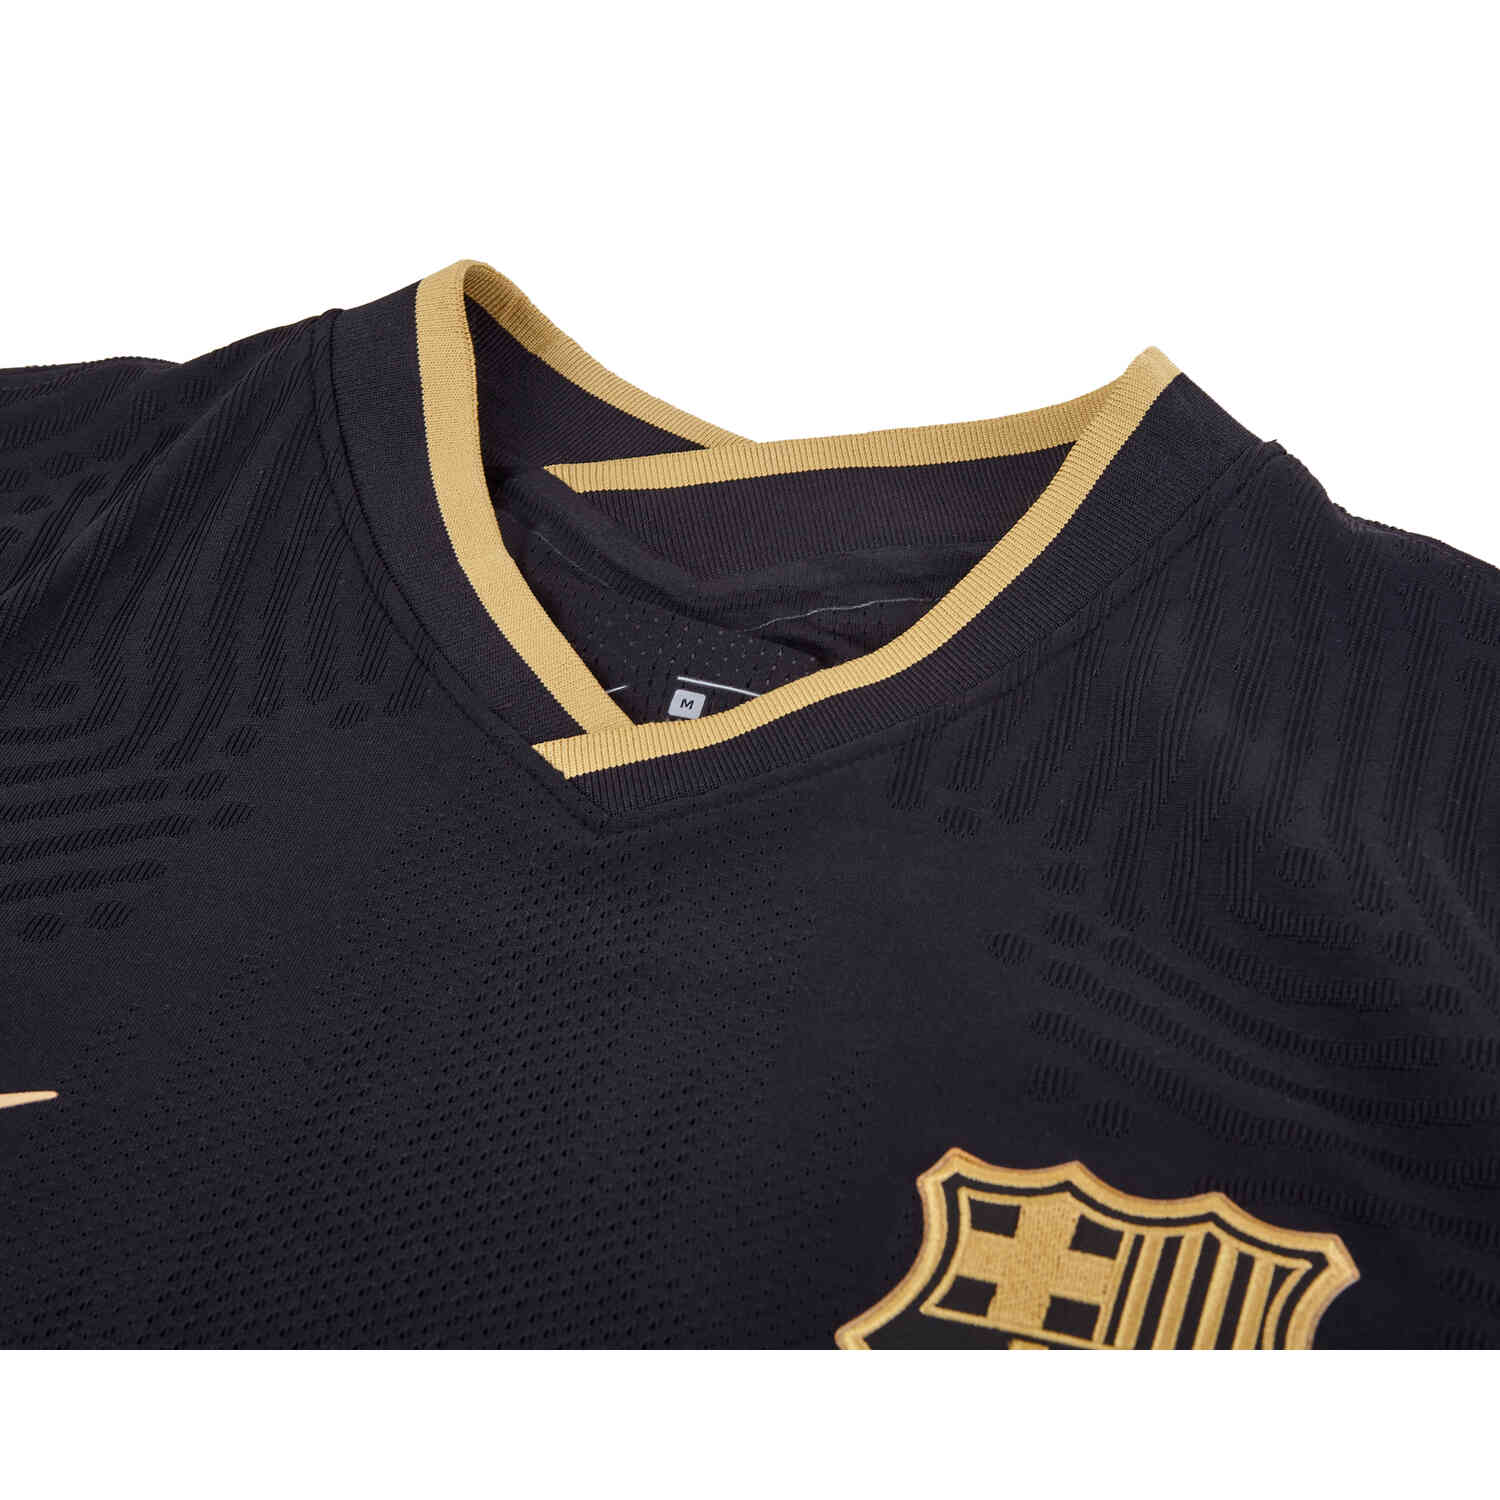 2020/21 Nike Barcelona Match SoccerPro